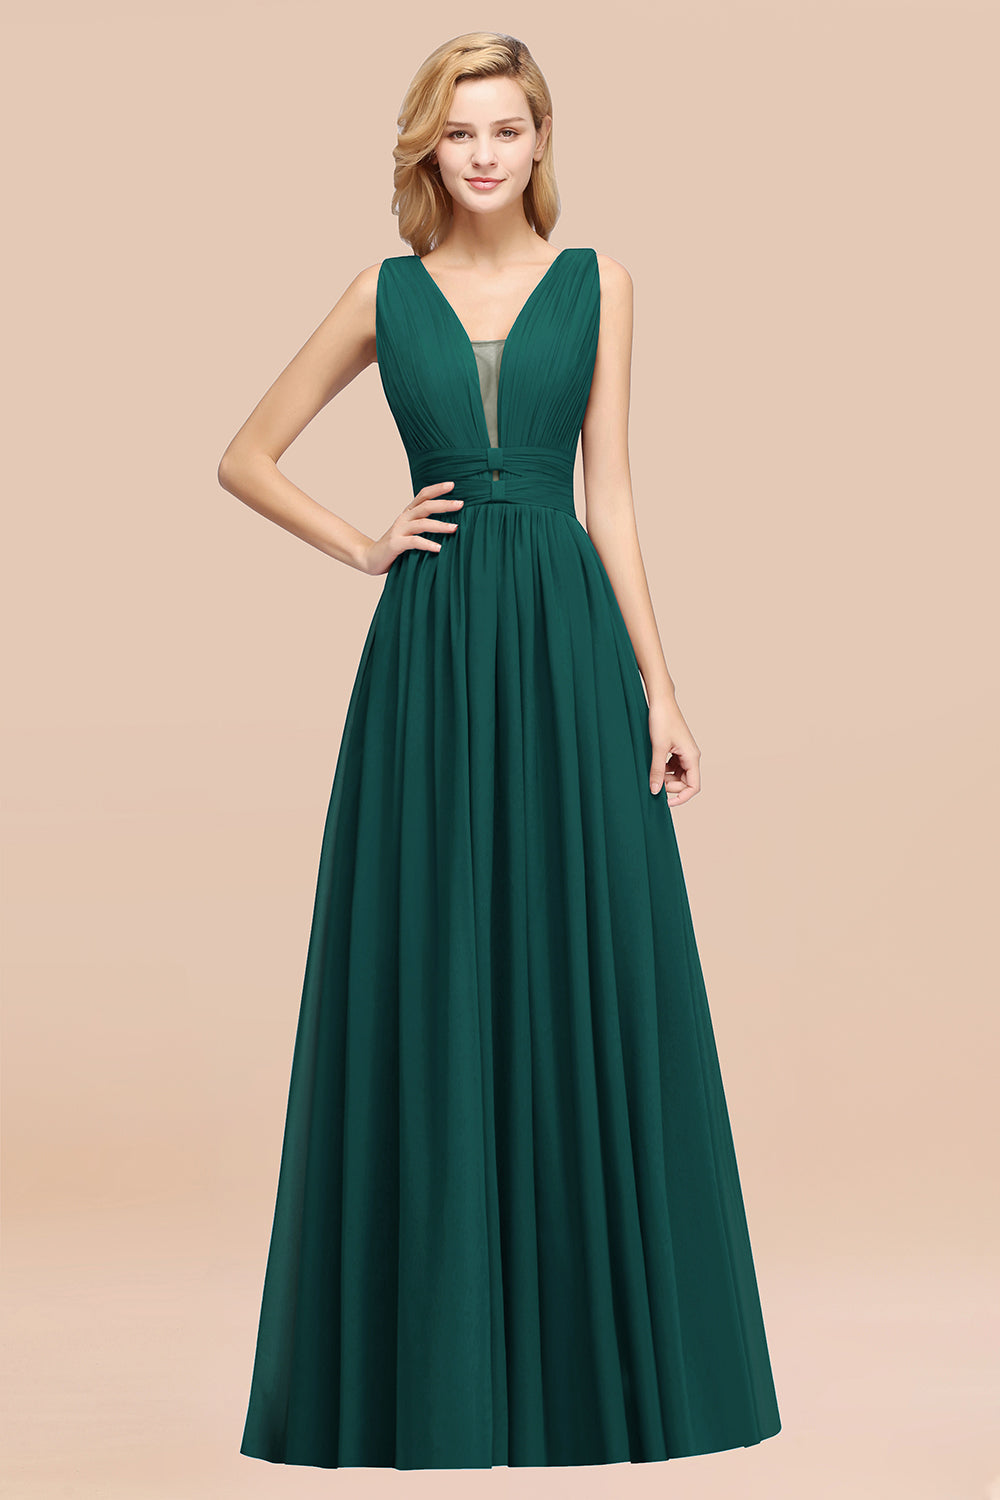 Modest Dark Green Long Bridesmaid Dress Deep V-Neck Chiffon Maid of Honor Dress